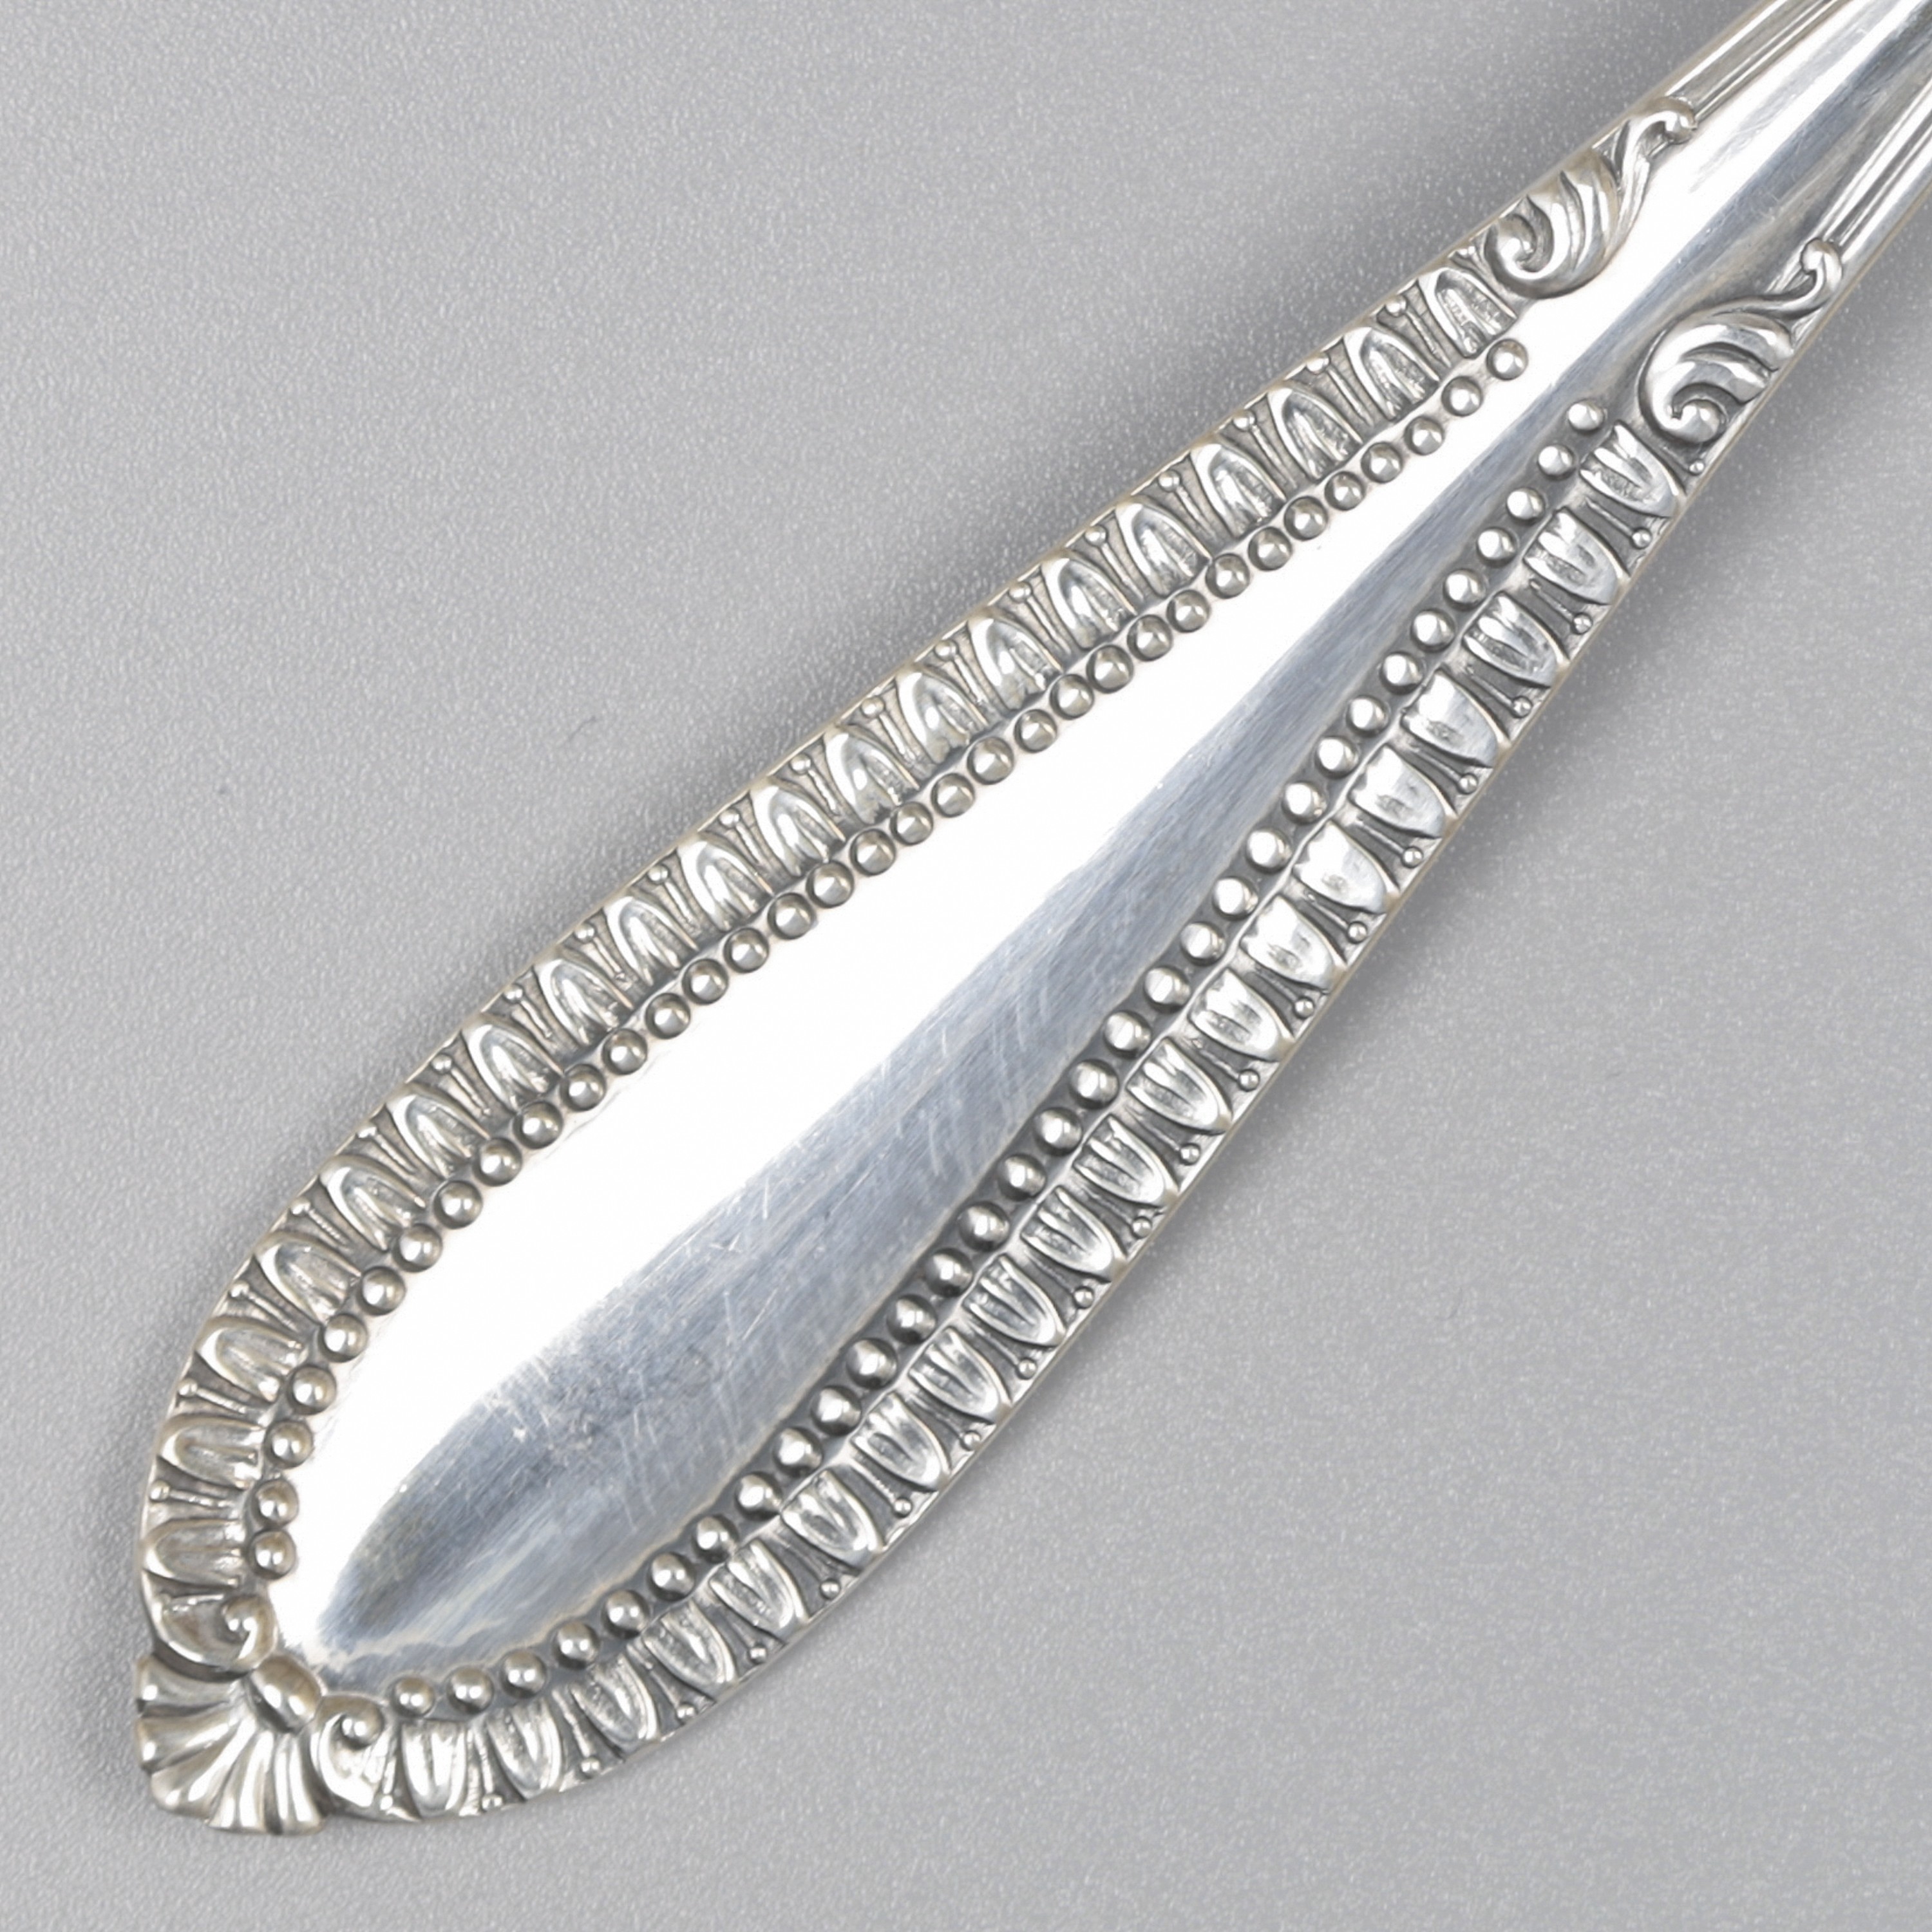 No reserve - 6-piece set of forks, model Grand Paris, silver. - Image 4 of 6